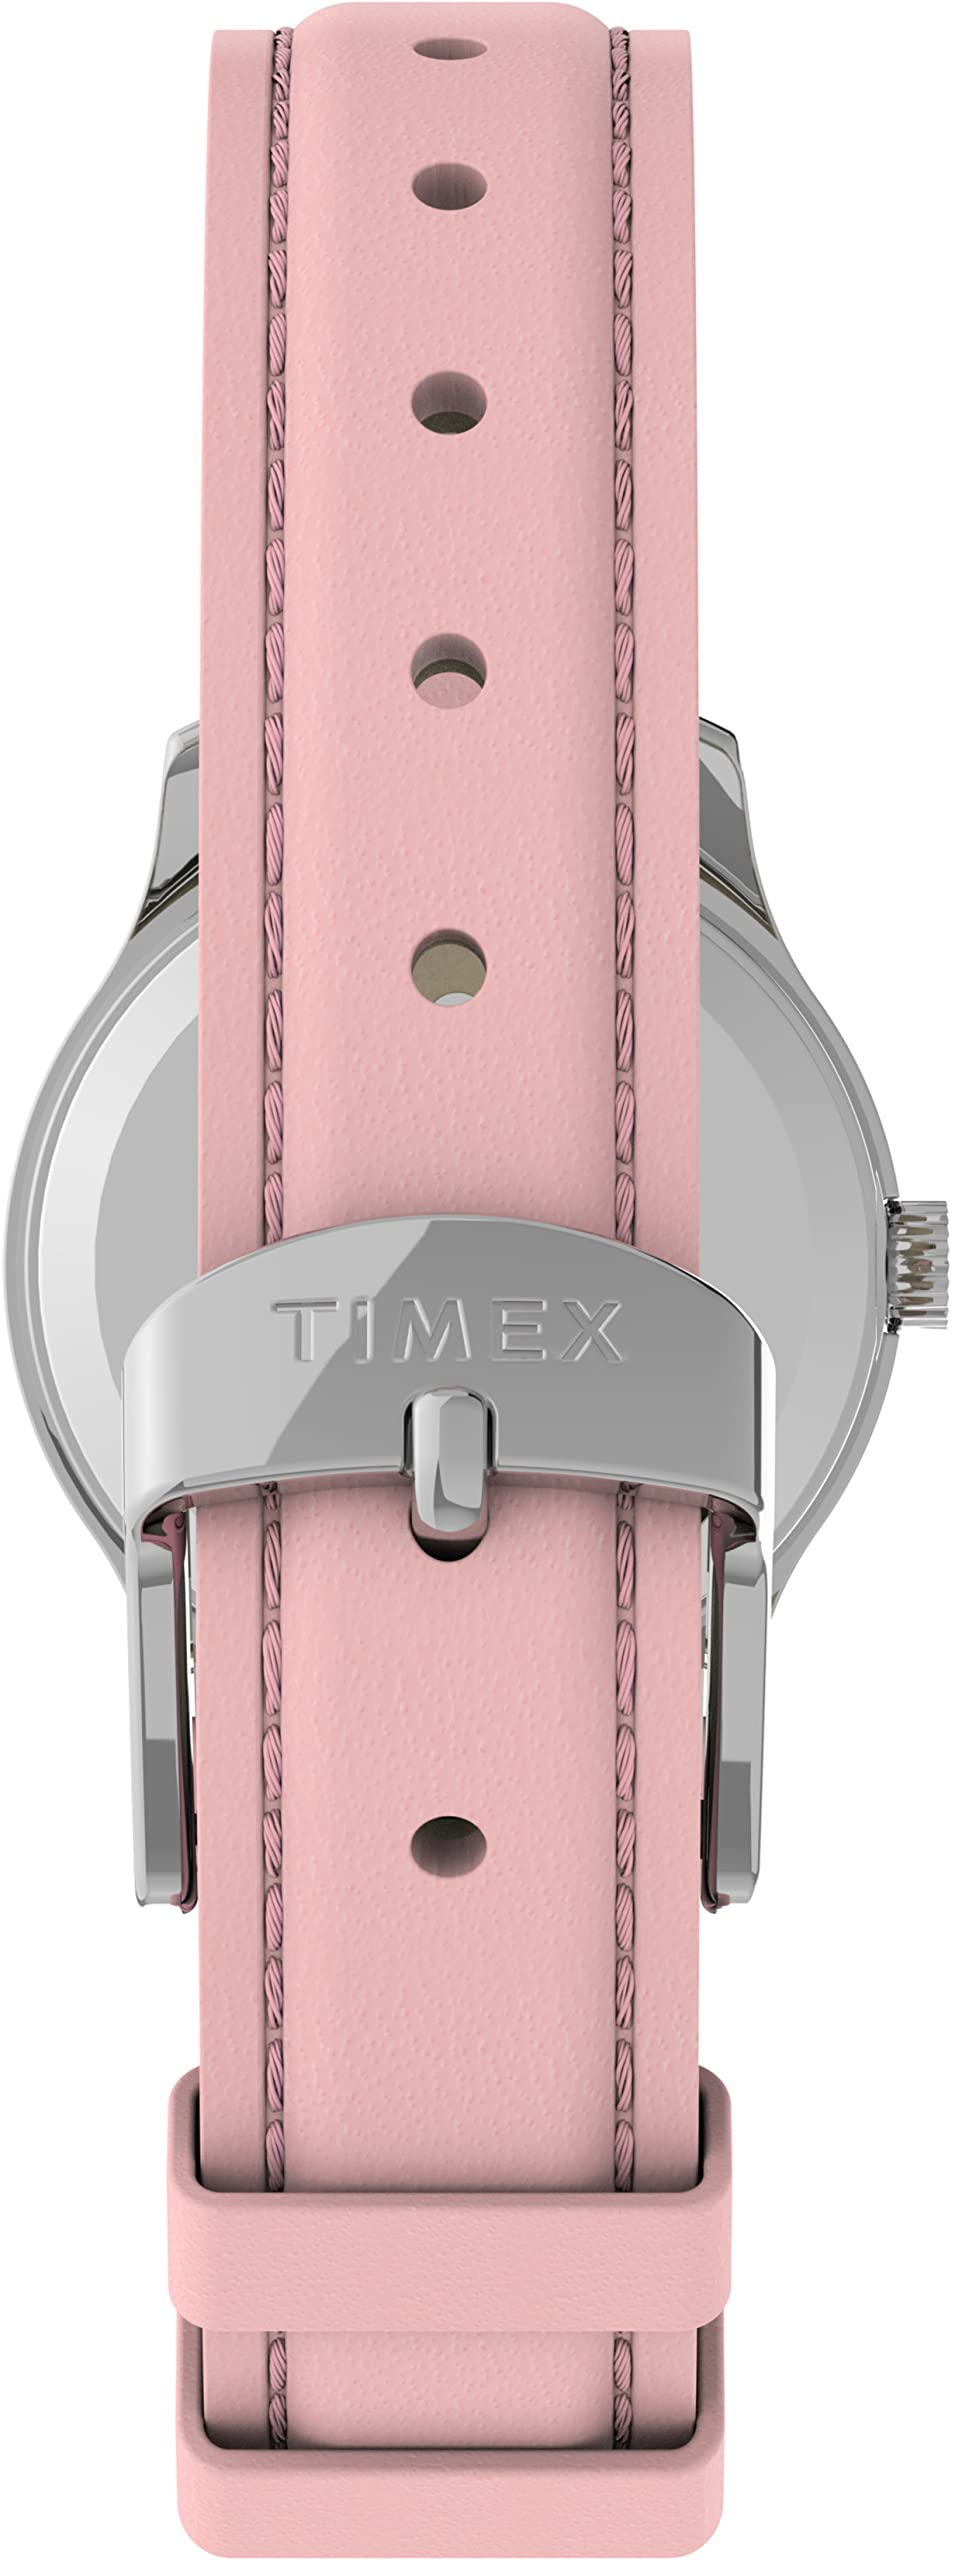 TIMEX TIME Machines 24mm Pink Strap Watch